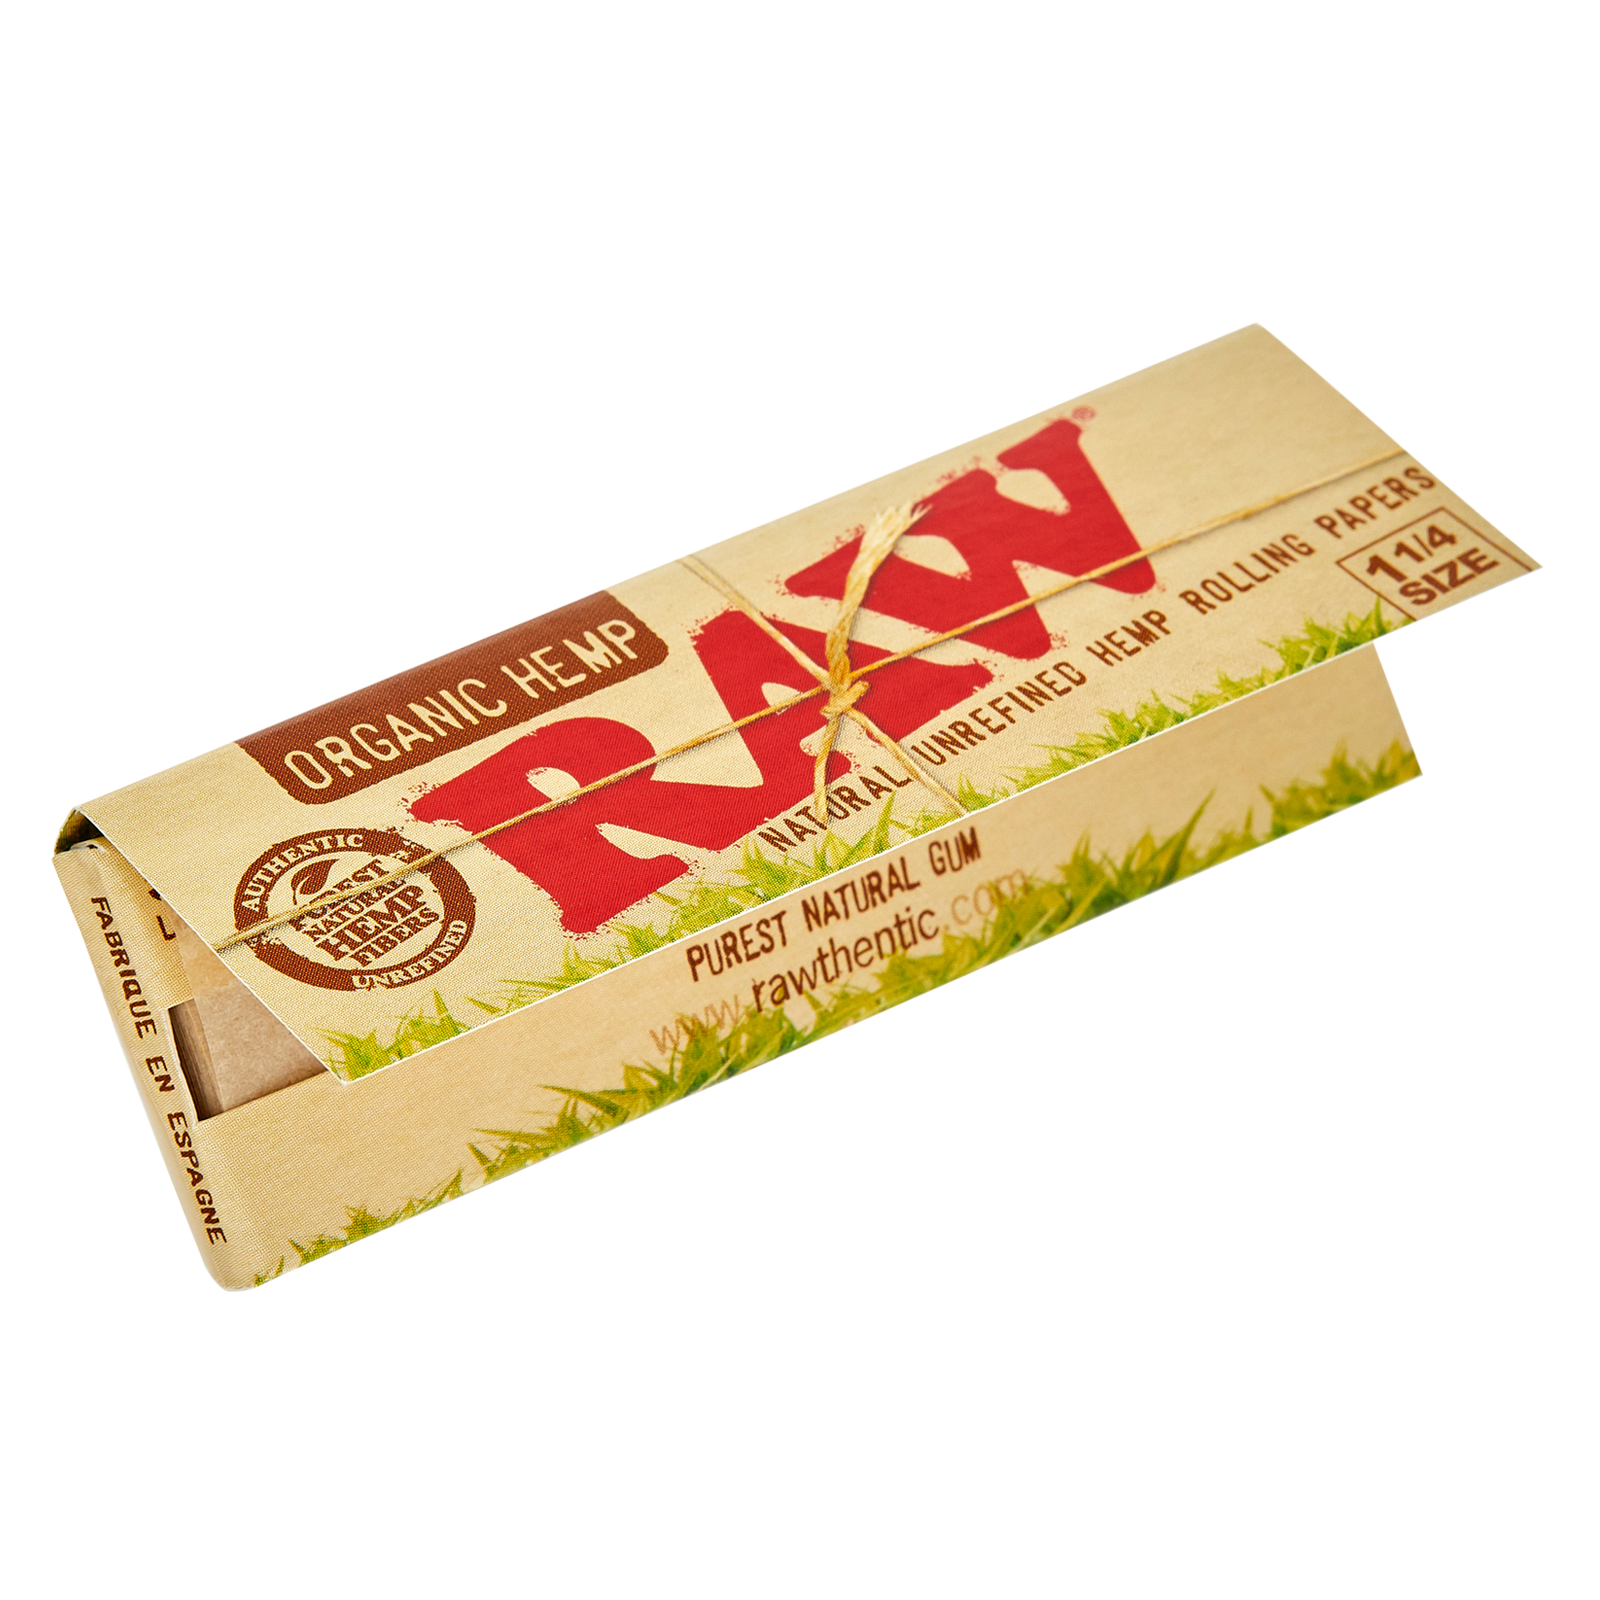 RAW Organic Hemp Rolling Papers 1 1/4in